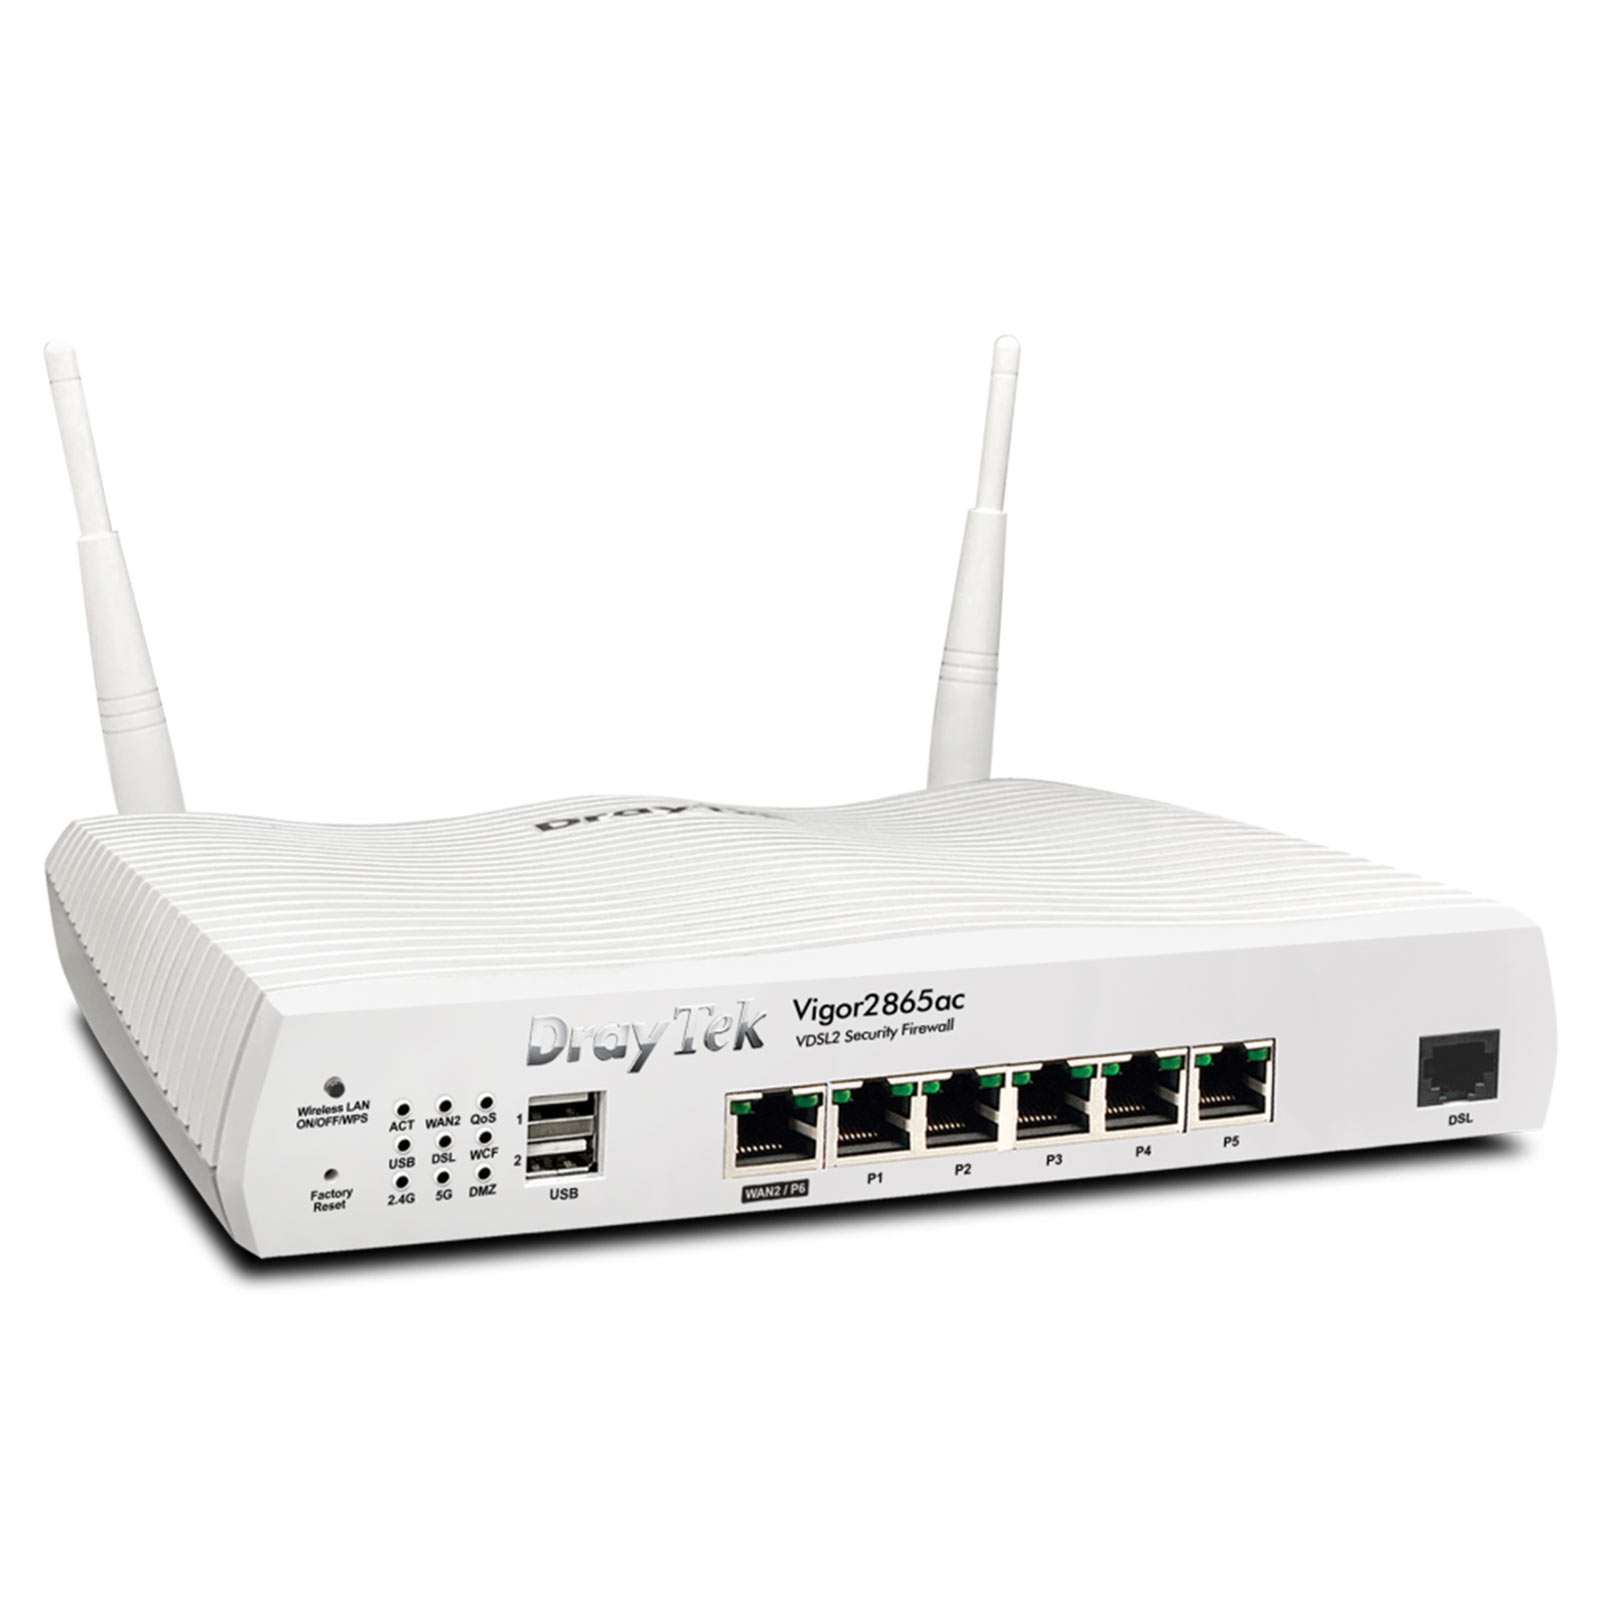 DrayTek Vigor 2865ax Annex-A 35b/VDSL/VDSL2/ADSL/ADSL2 Modem-Router  (Annex-A nicht für